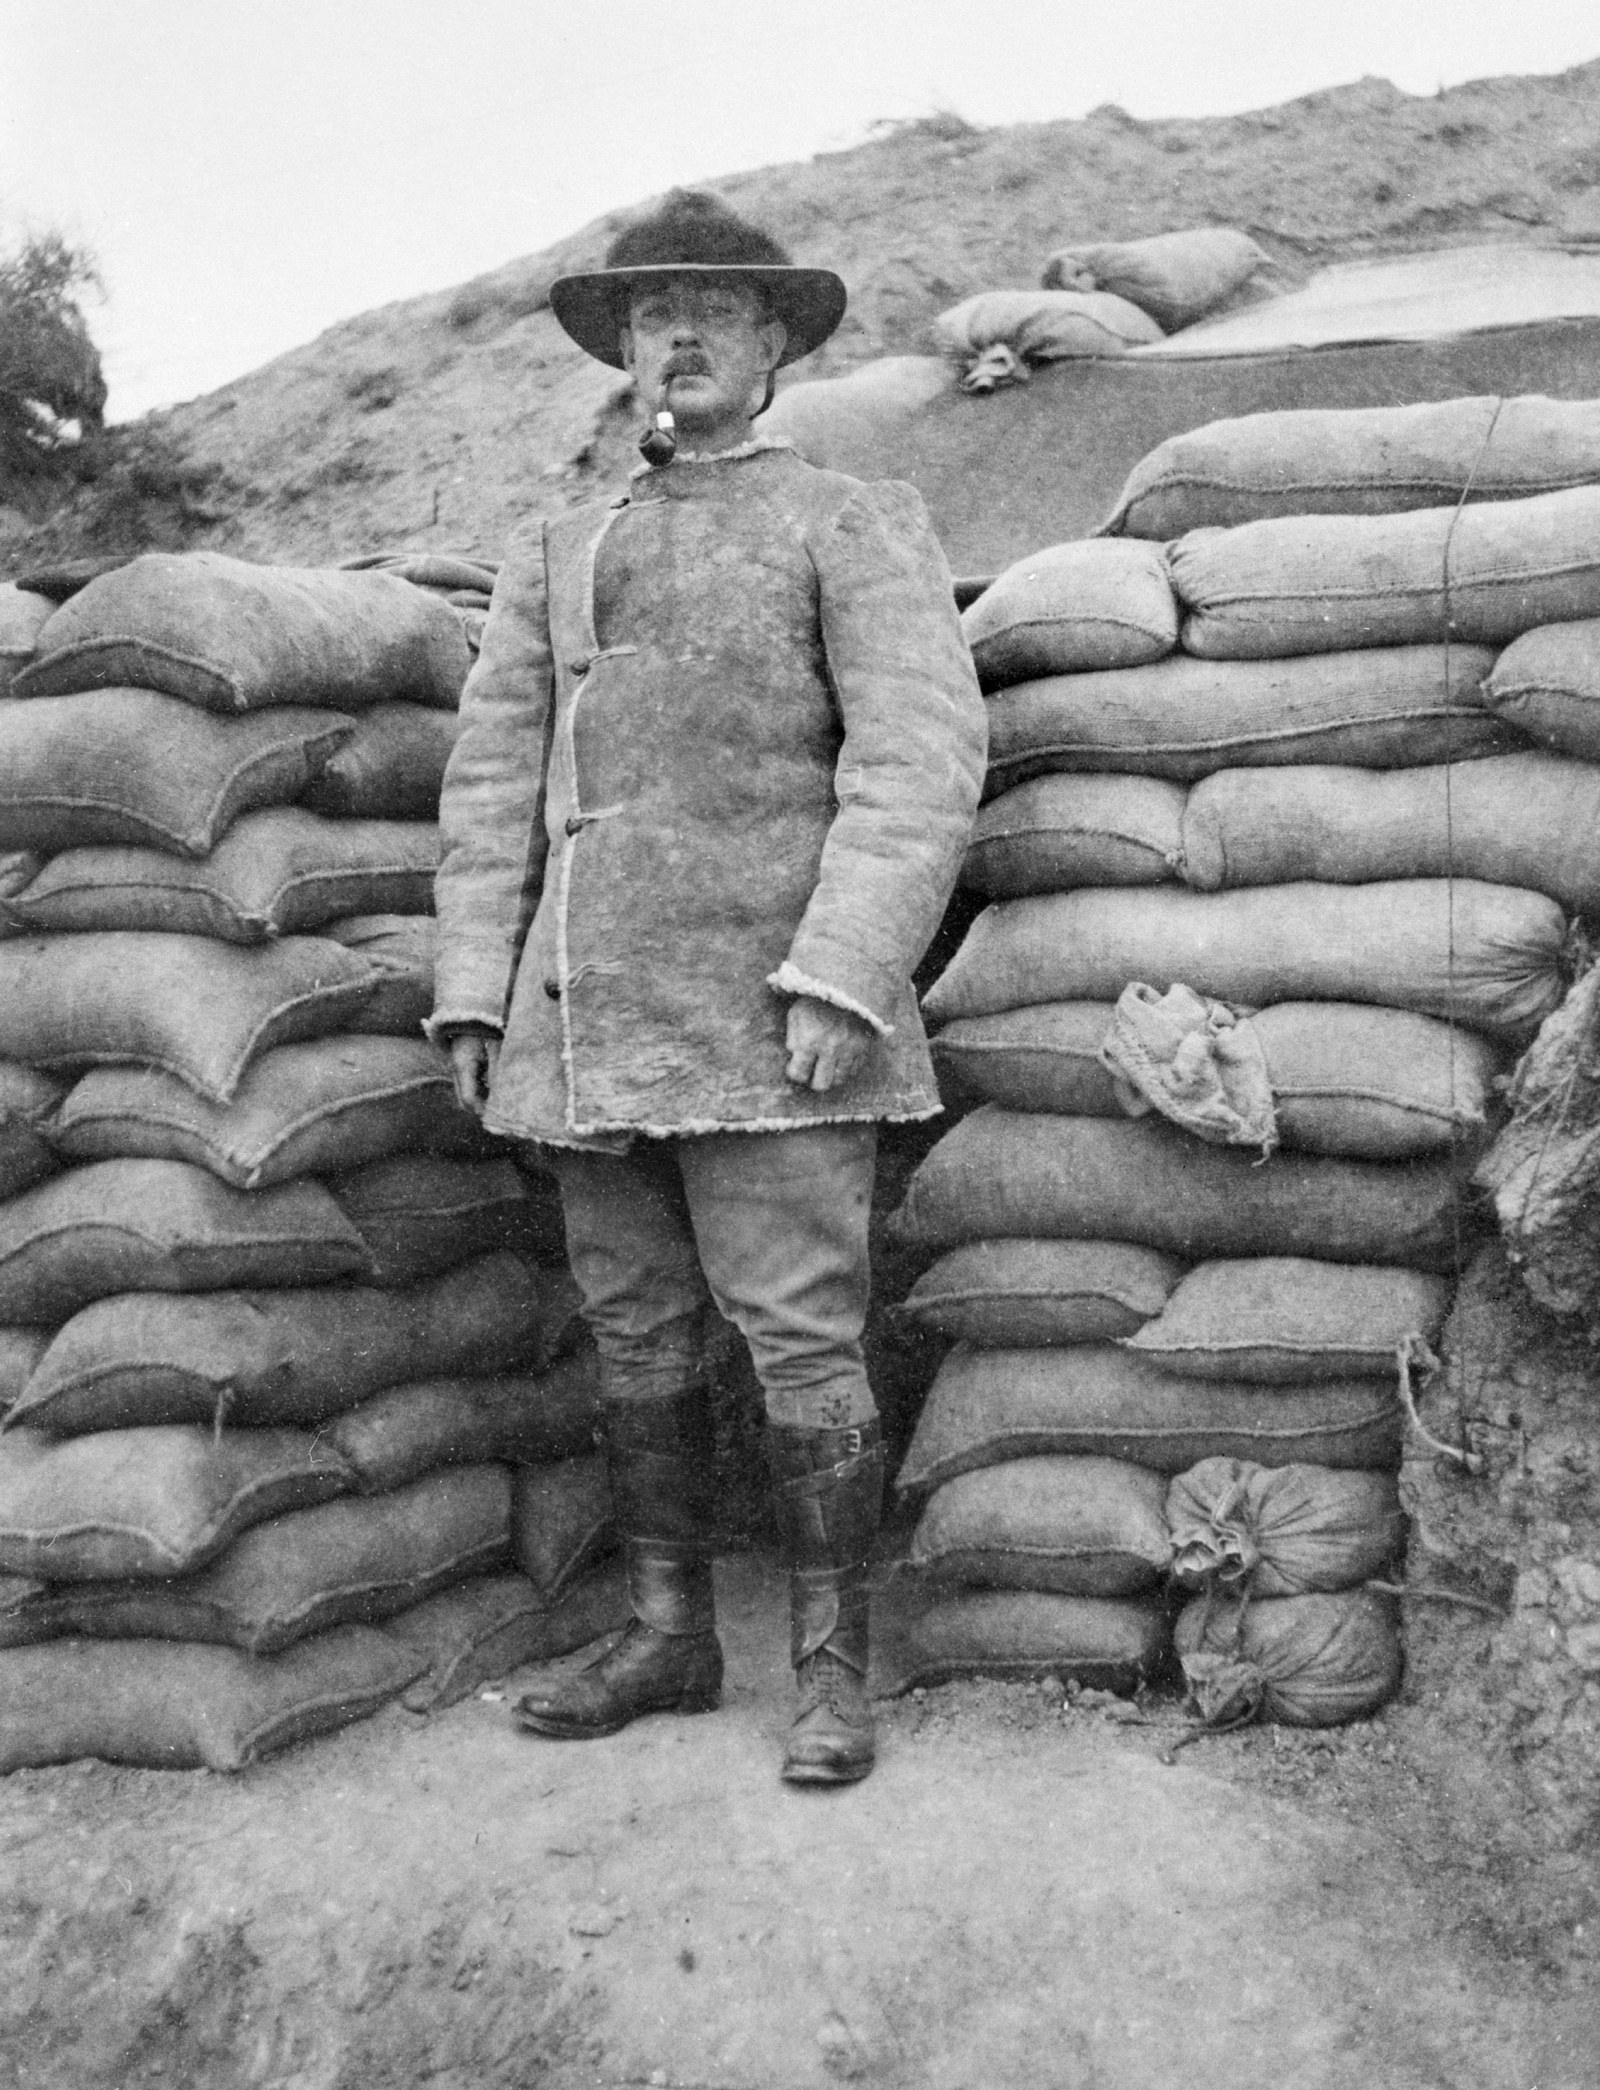 Lieutenant Norman Matthew Pearce, 6th Australian Light Horse Regiment, outside the sandbagged entrance of his dugout, November 1915